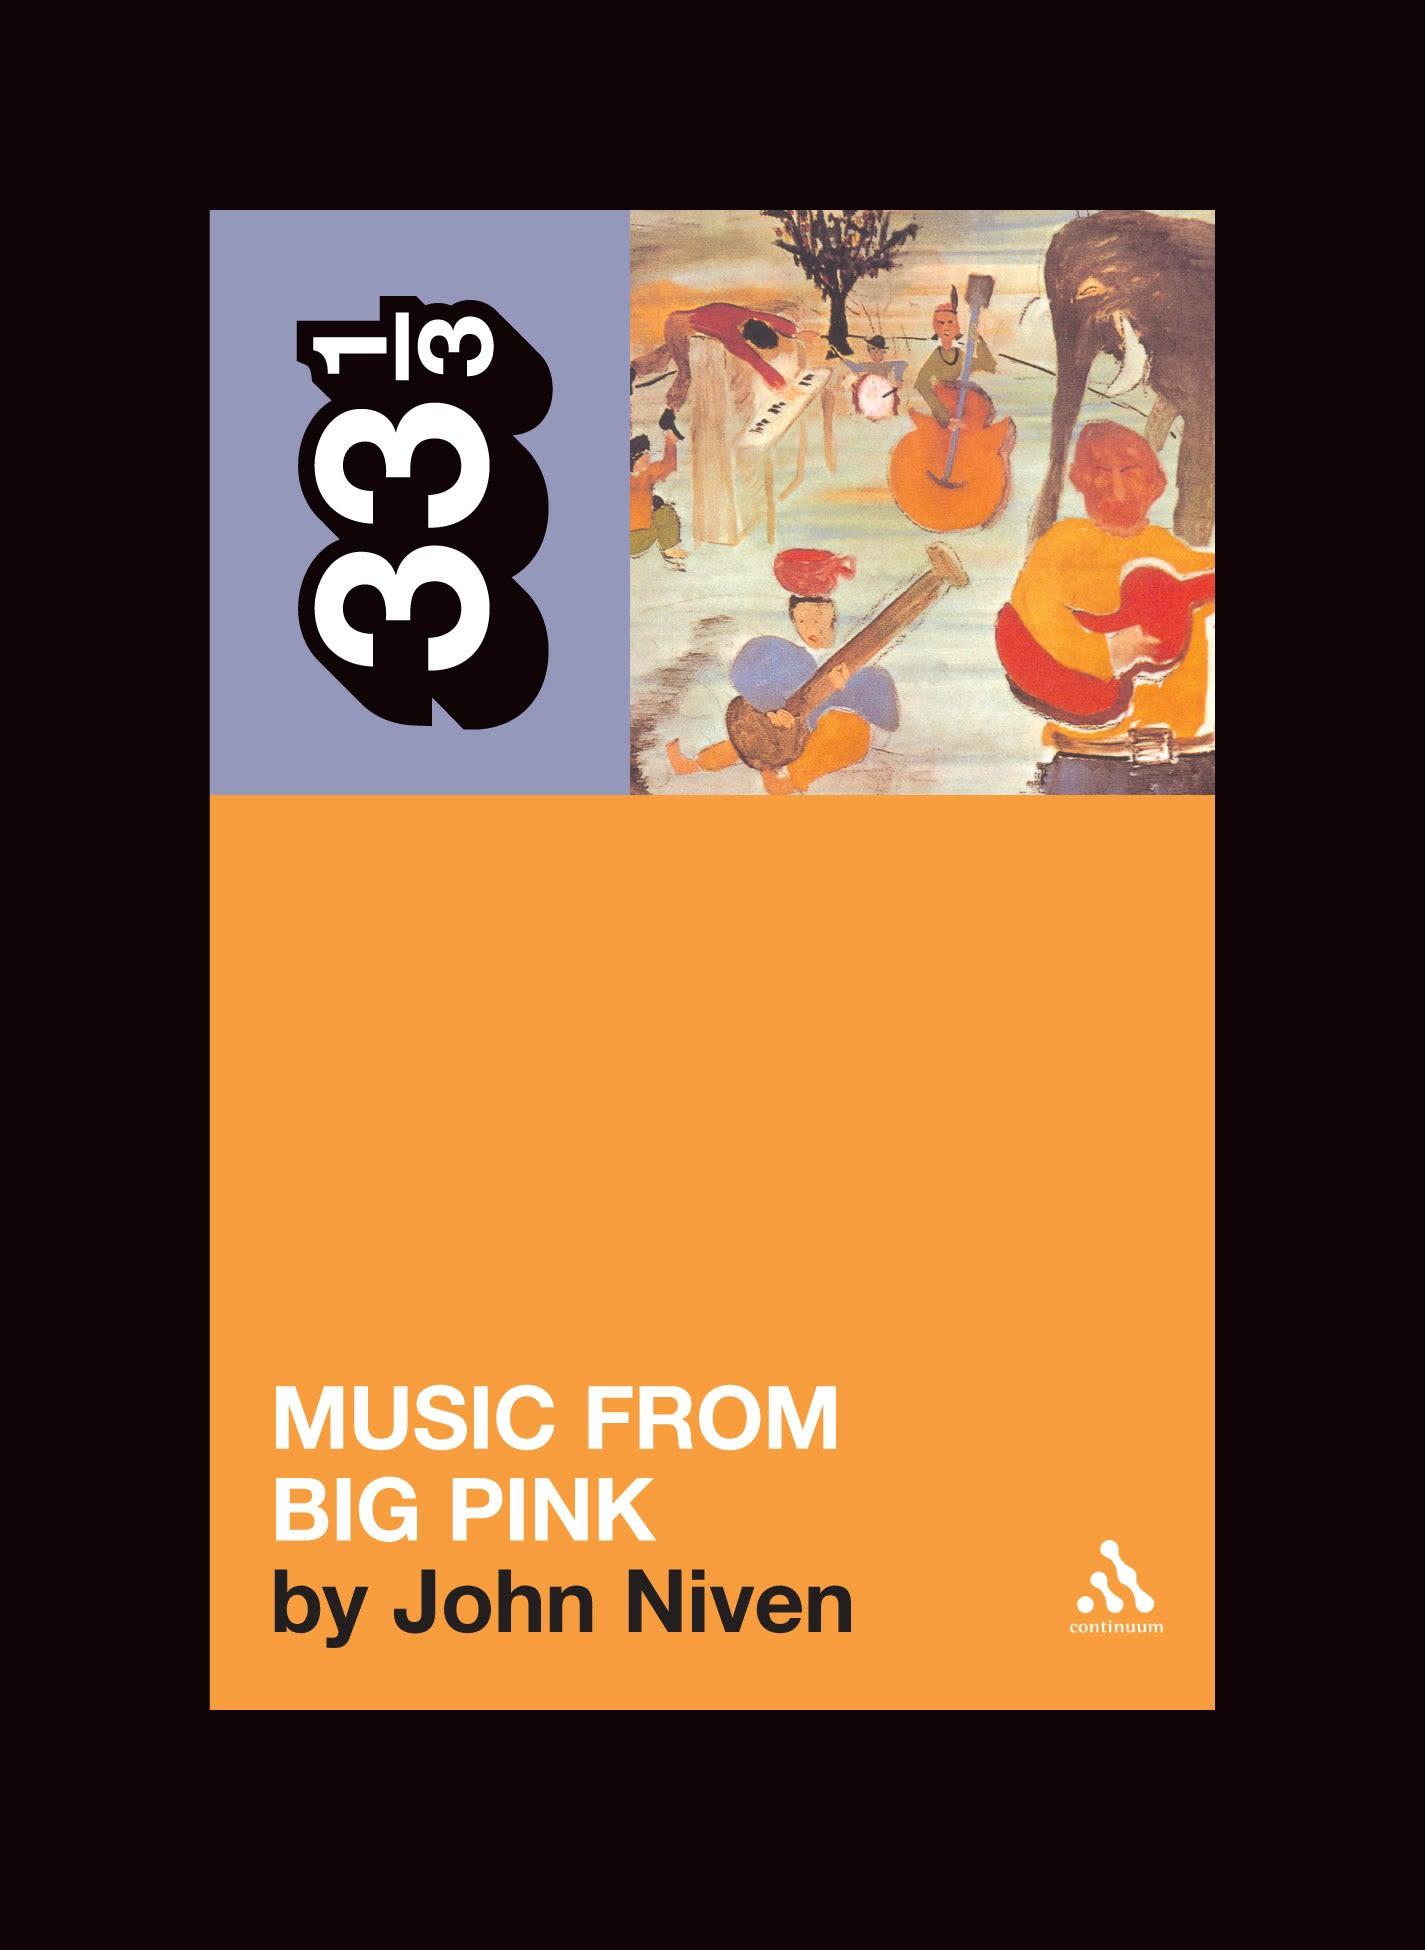 The Band's Music from Big Pink / John Niven / Taschenbuch / 33 1/3 / Kartoniert / Broschiert / Englisch / 2006 / Bloomsbury Publishing PLC / EAN 9780826417718 - Niven, John